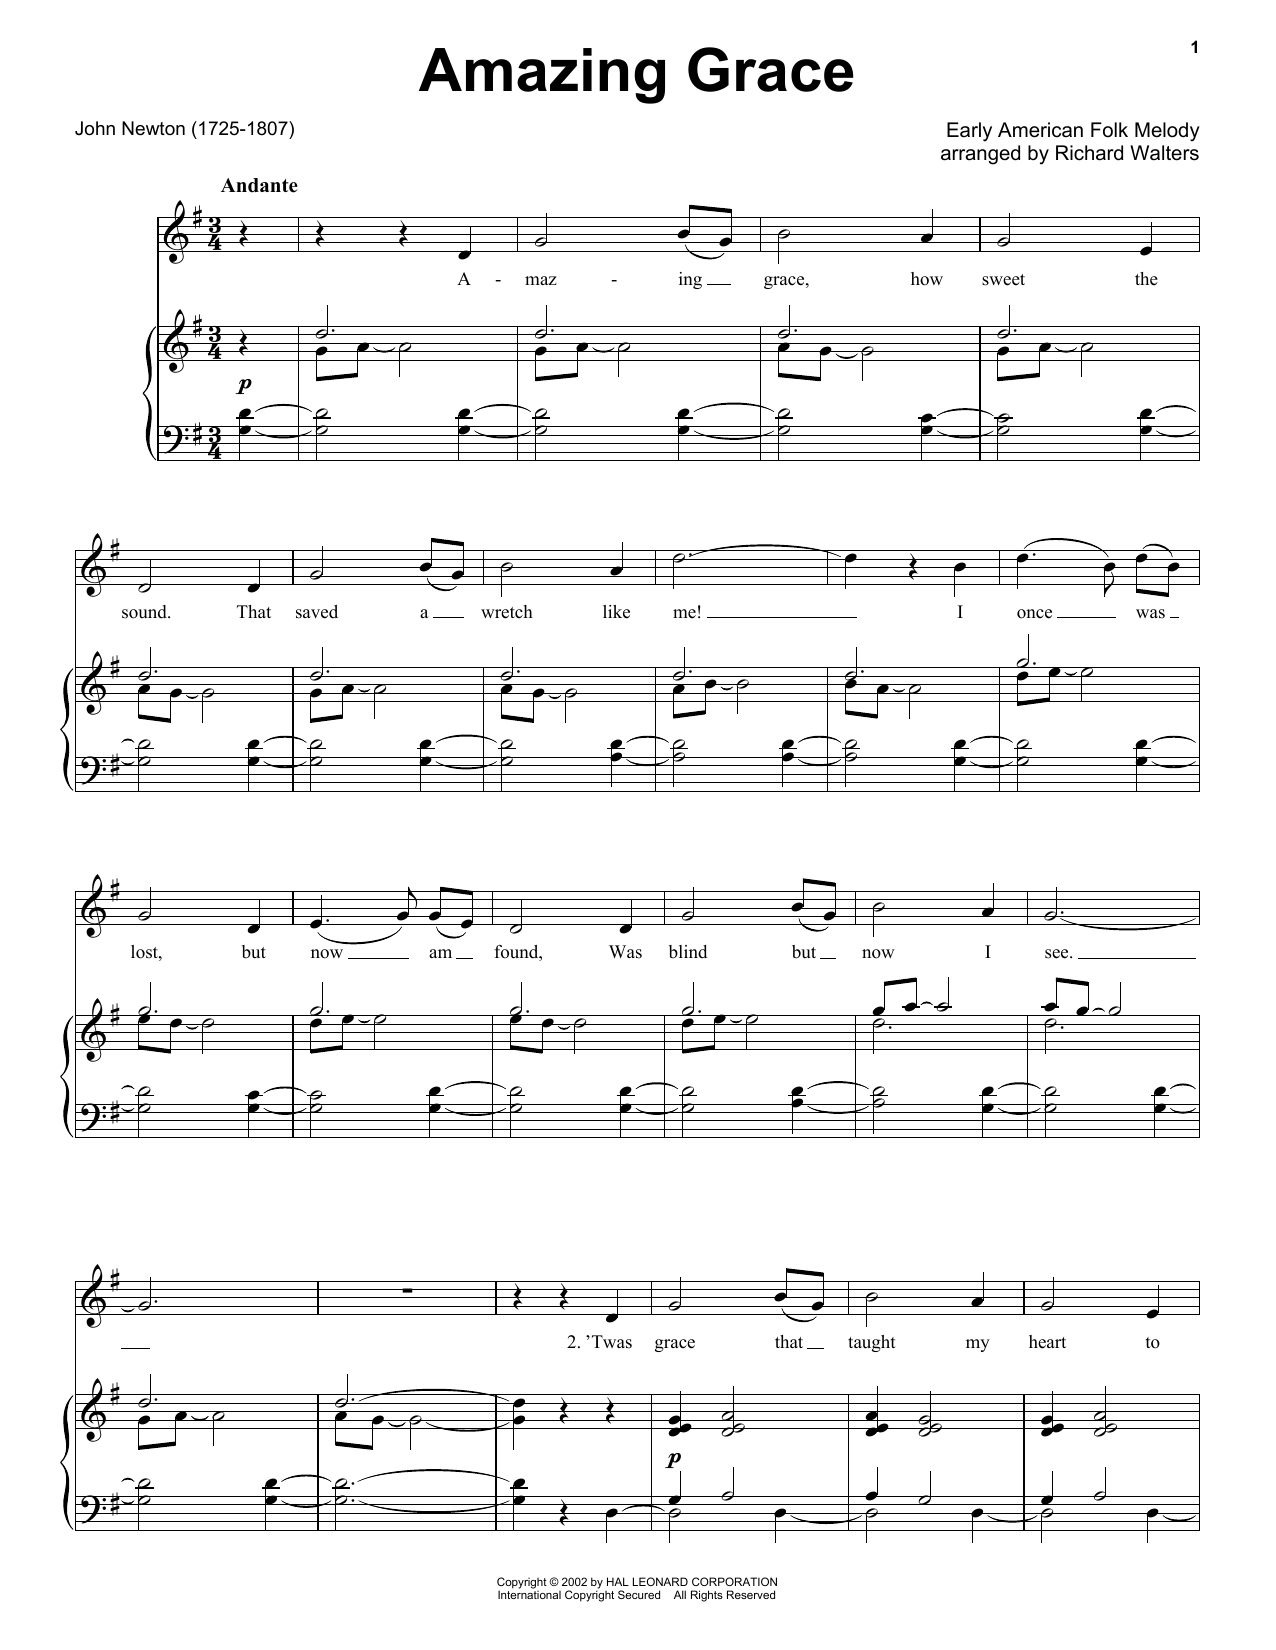 John Newton Amazing Grace Sheet Music Notes & Chords for Harp - Download or Print PDF